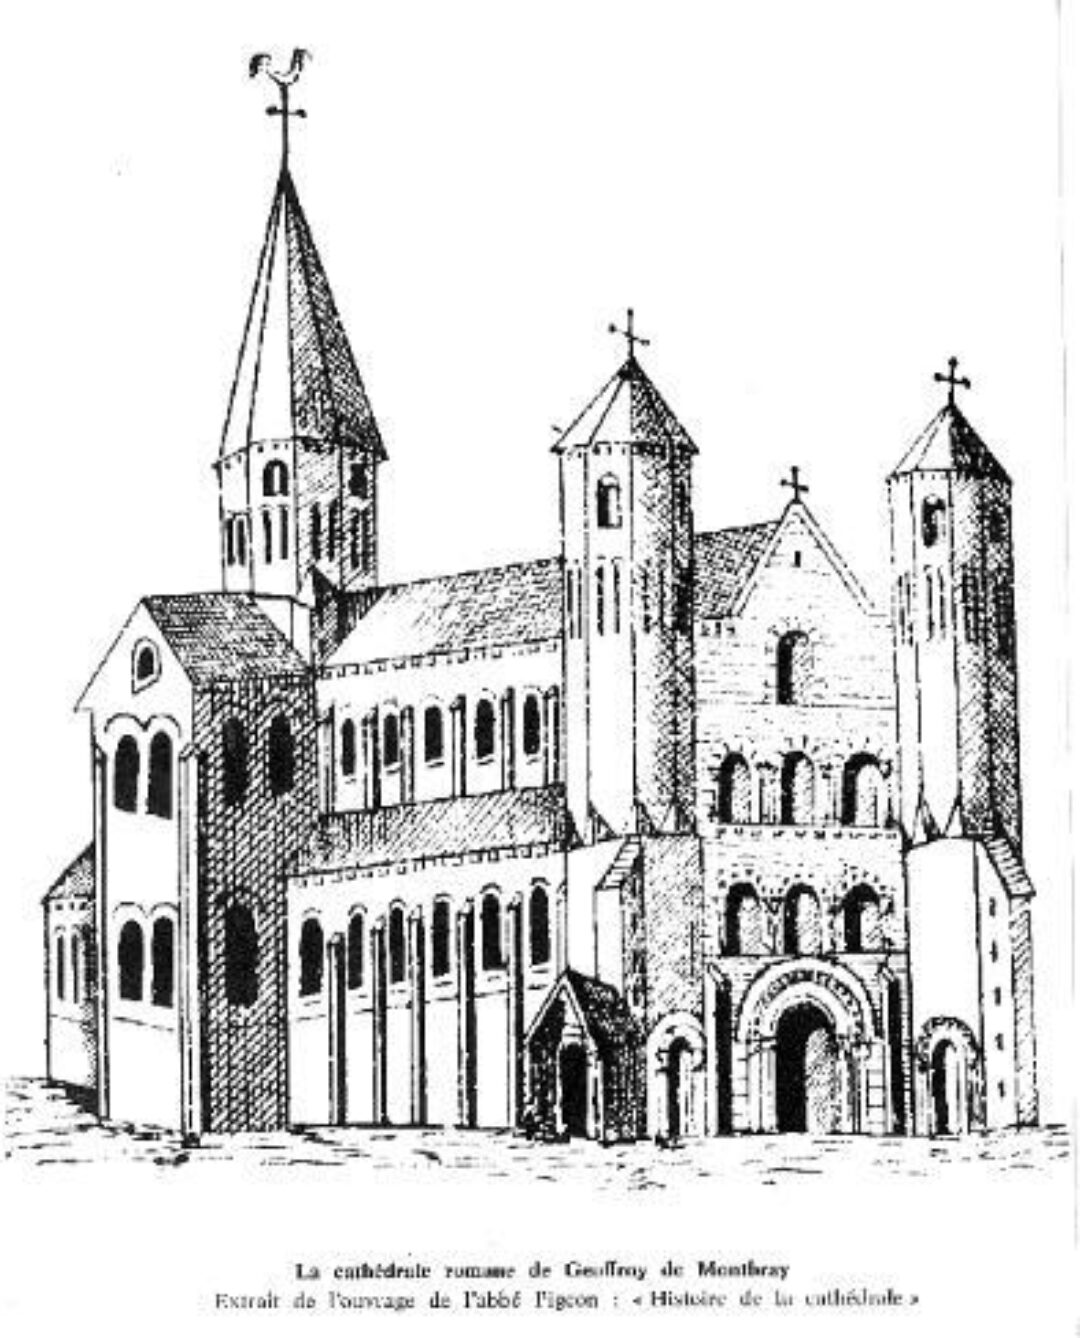 Fig 4 Romanesque Cathedral of Geoffrey de Montbray